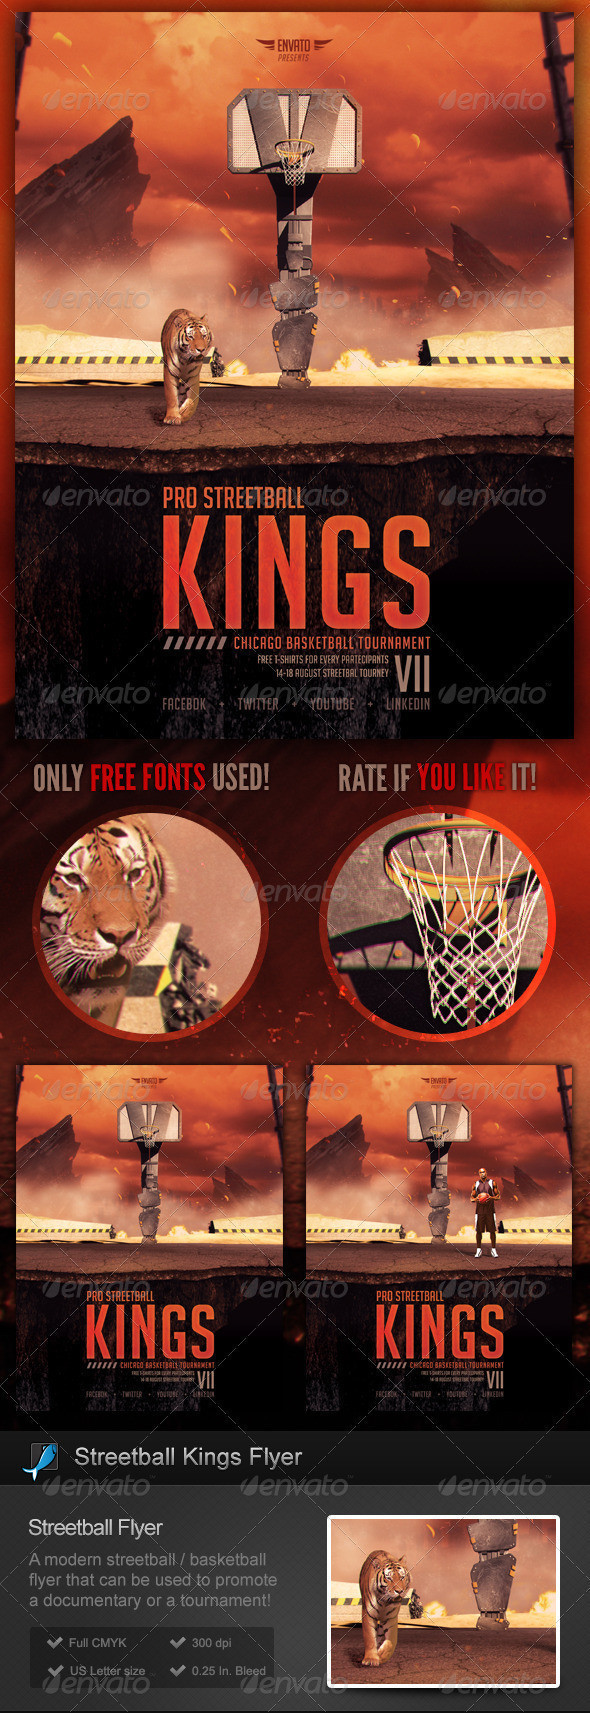 Streetball basketball hoops sports nba rucker flyer poster template showcase